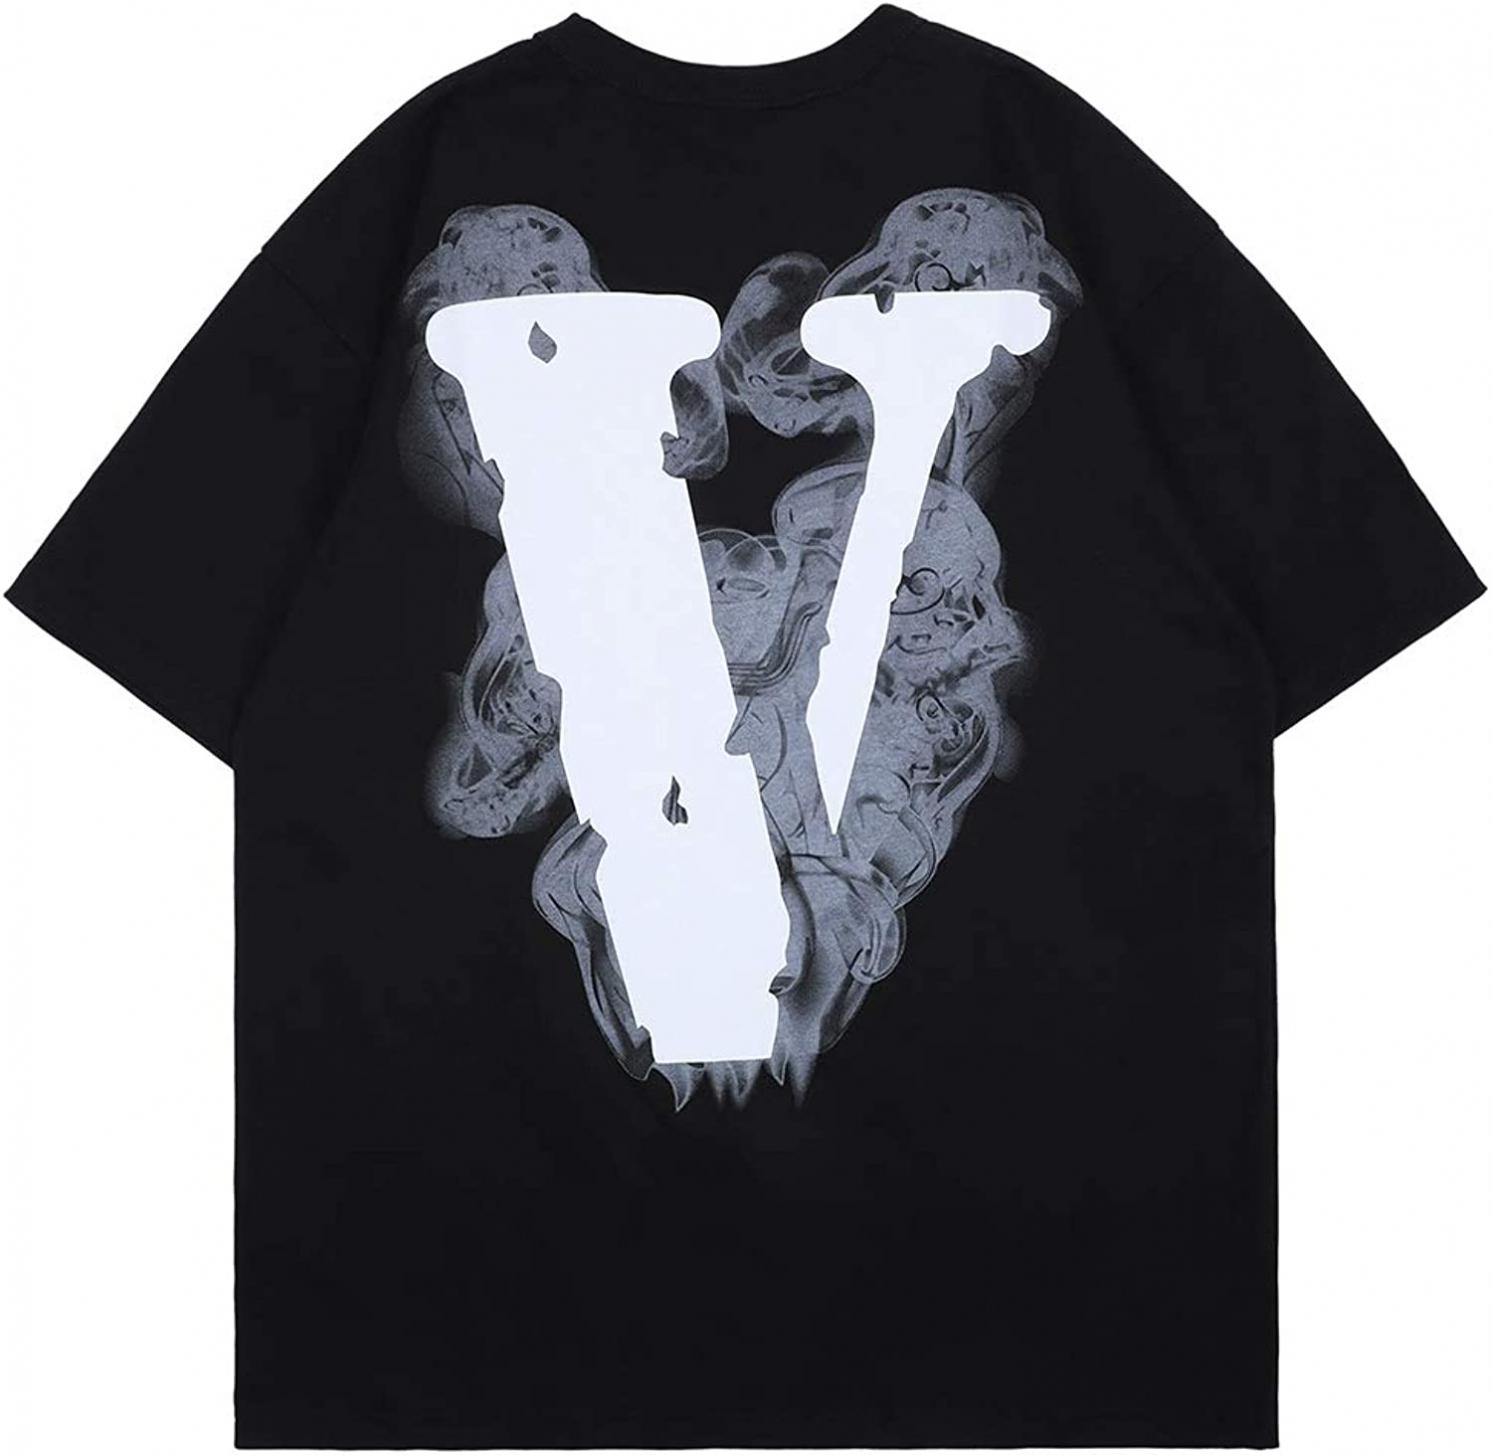 Men's Big V Letter Shirt Vintage Print Rapper Demon Graphic Tees Cotton Crew Neck Short Sleeve Tee Shirt S - XL